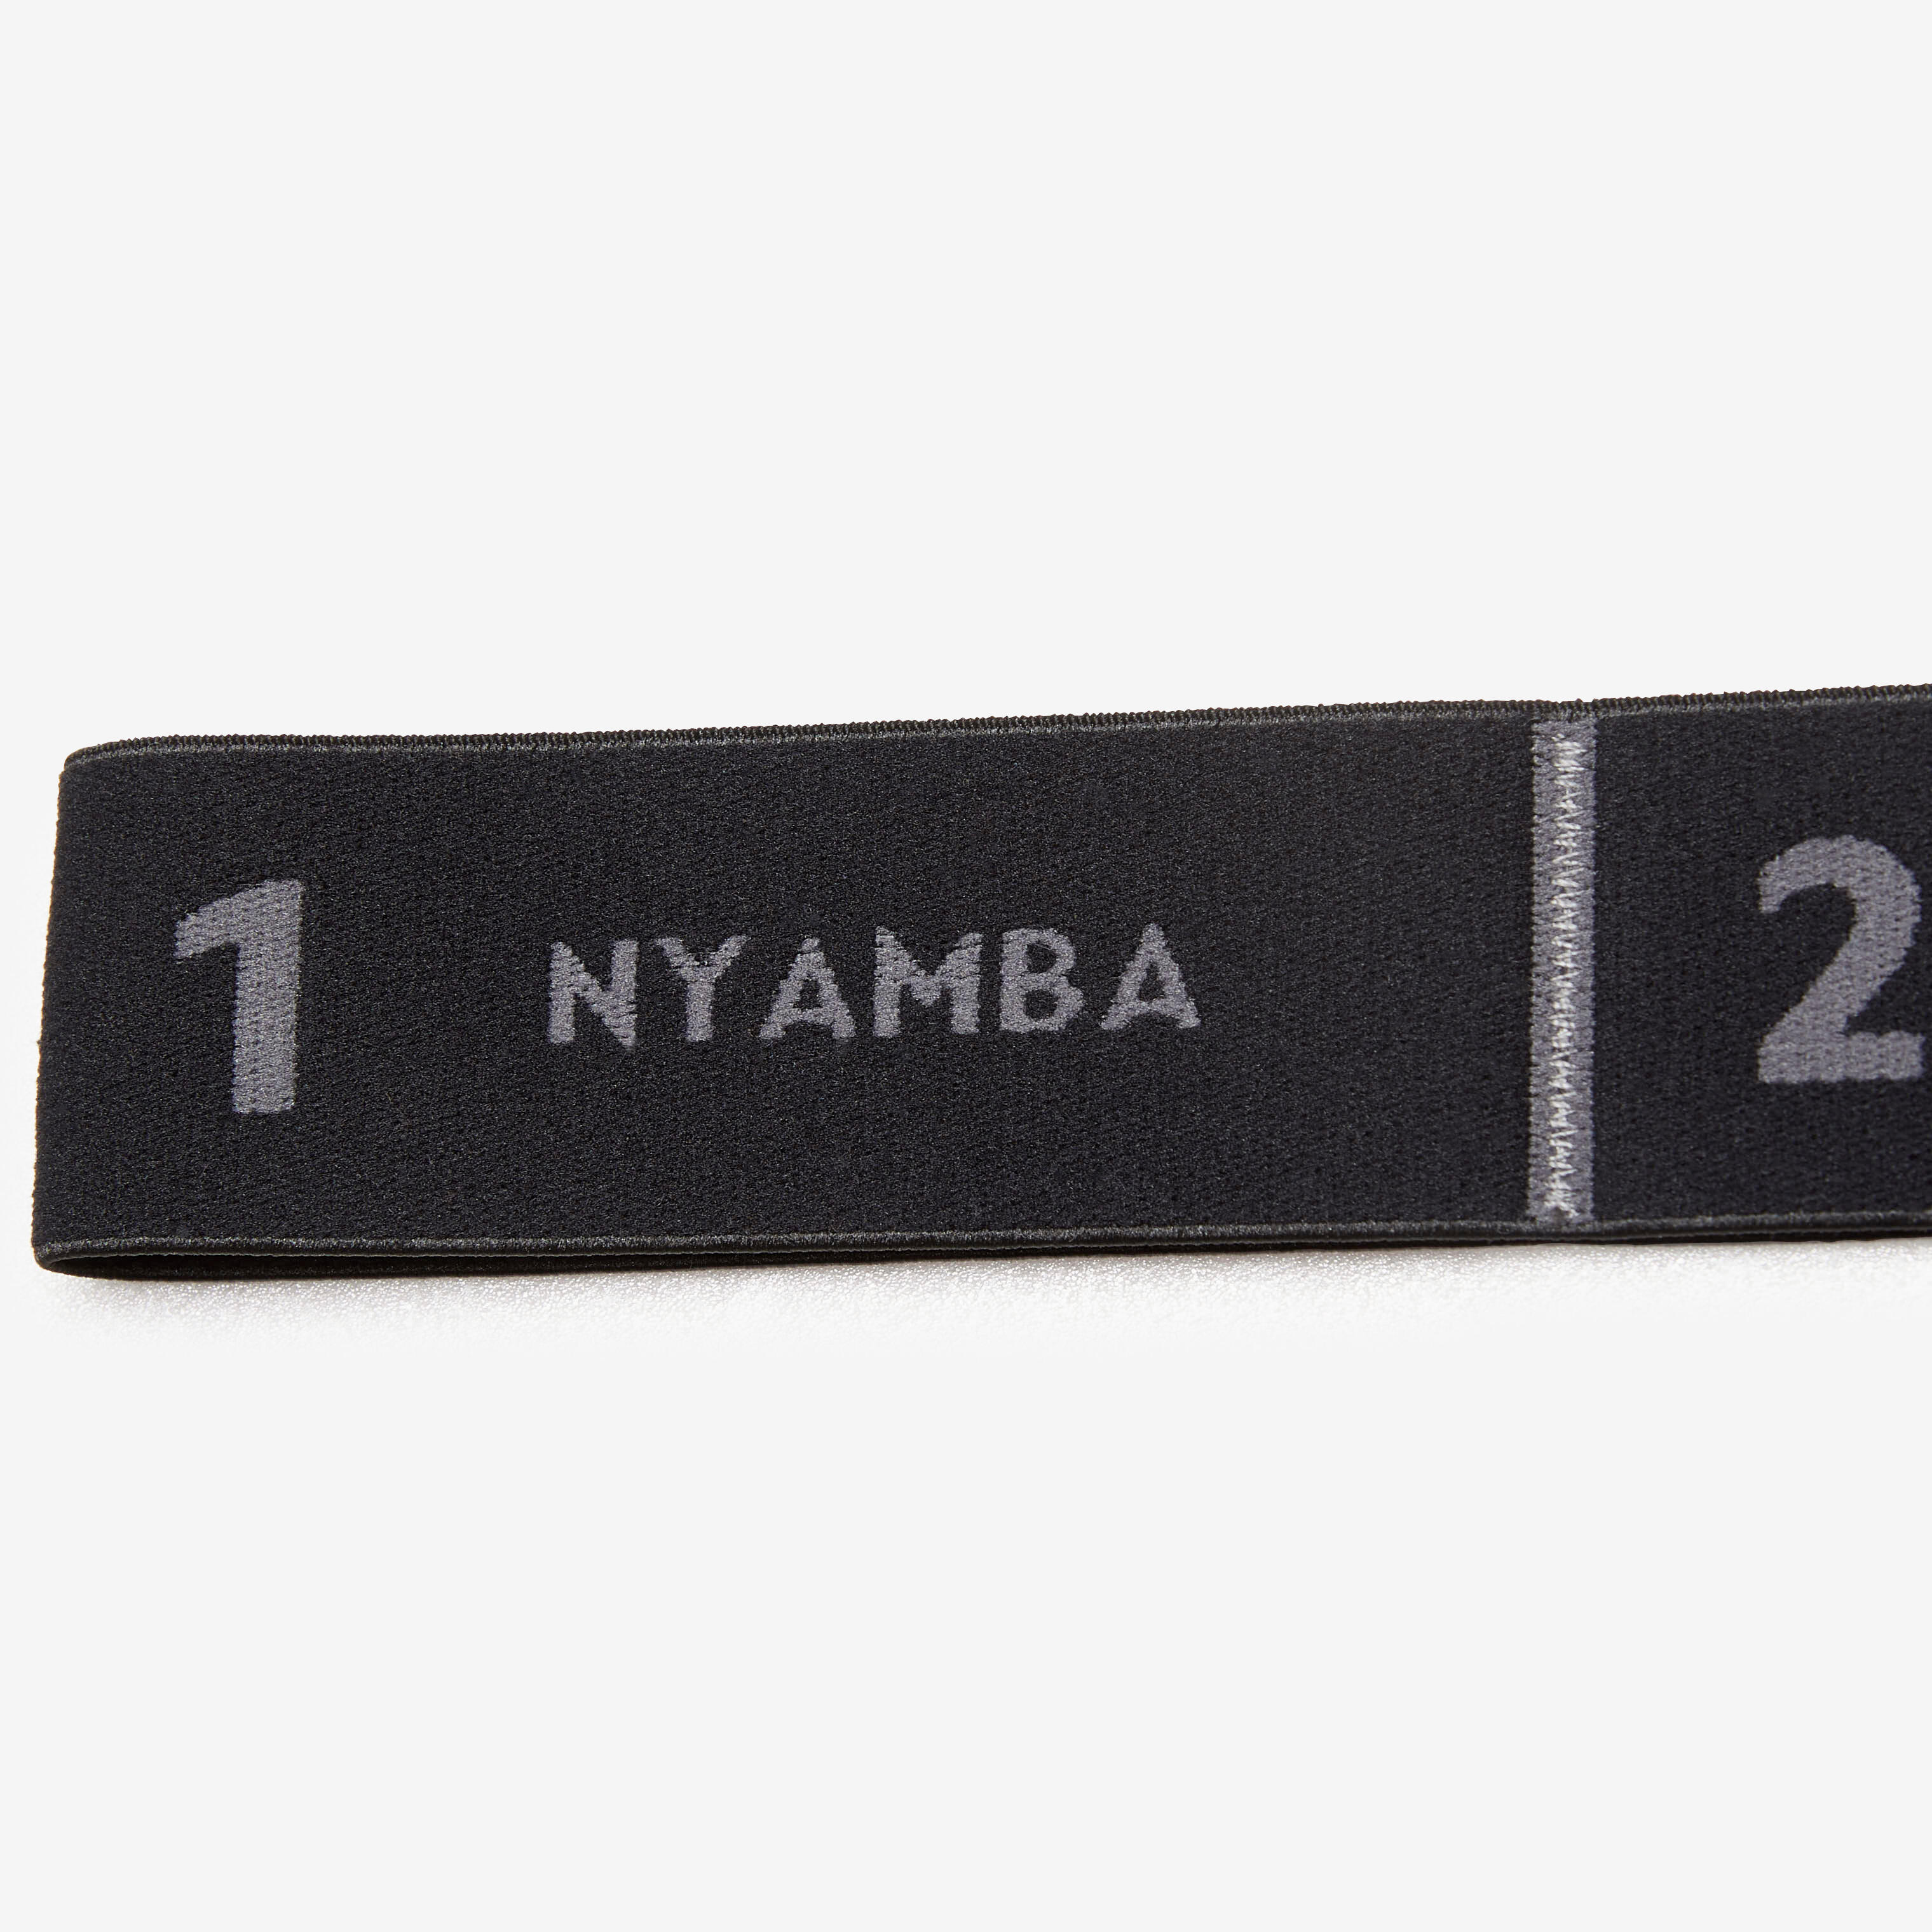 Bande élastique résistance élevée – 15 kg noir - NYAMBA